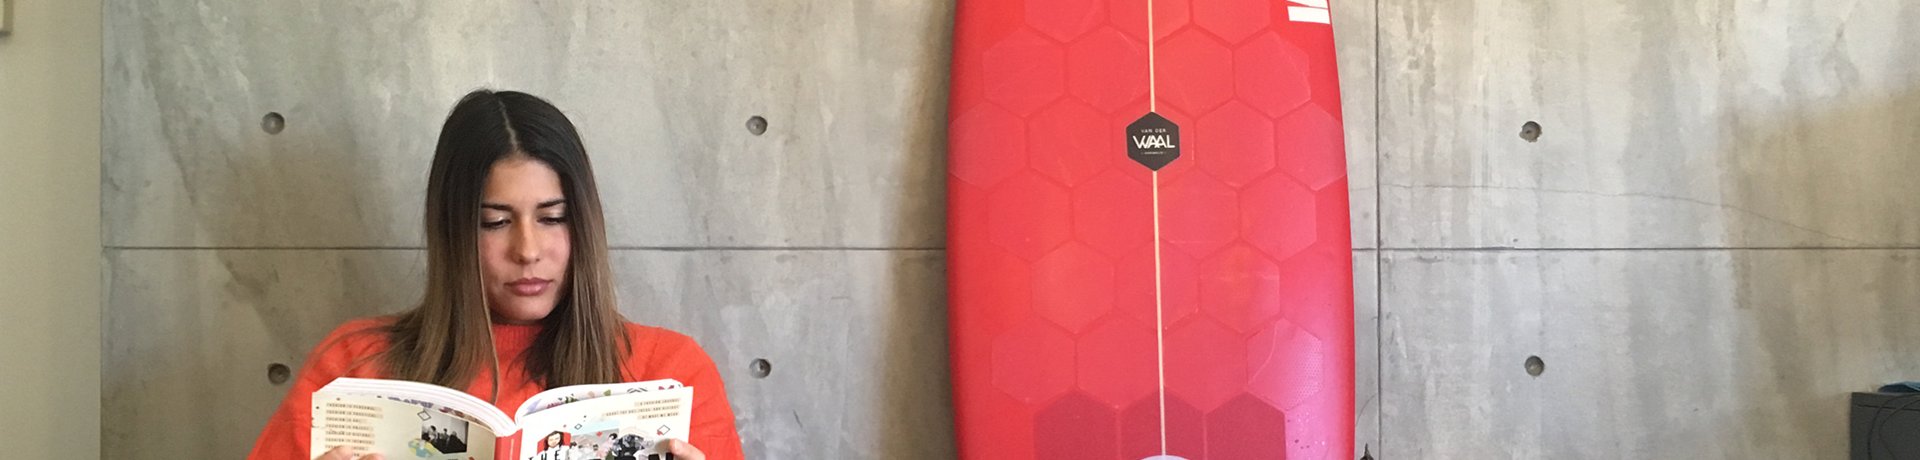 Van der Waal rEvolution Series Surfing